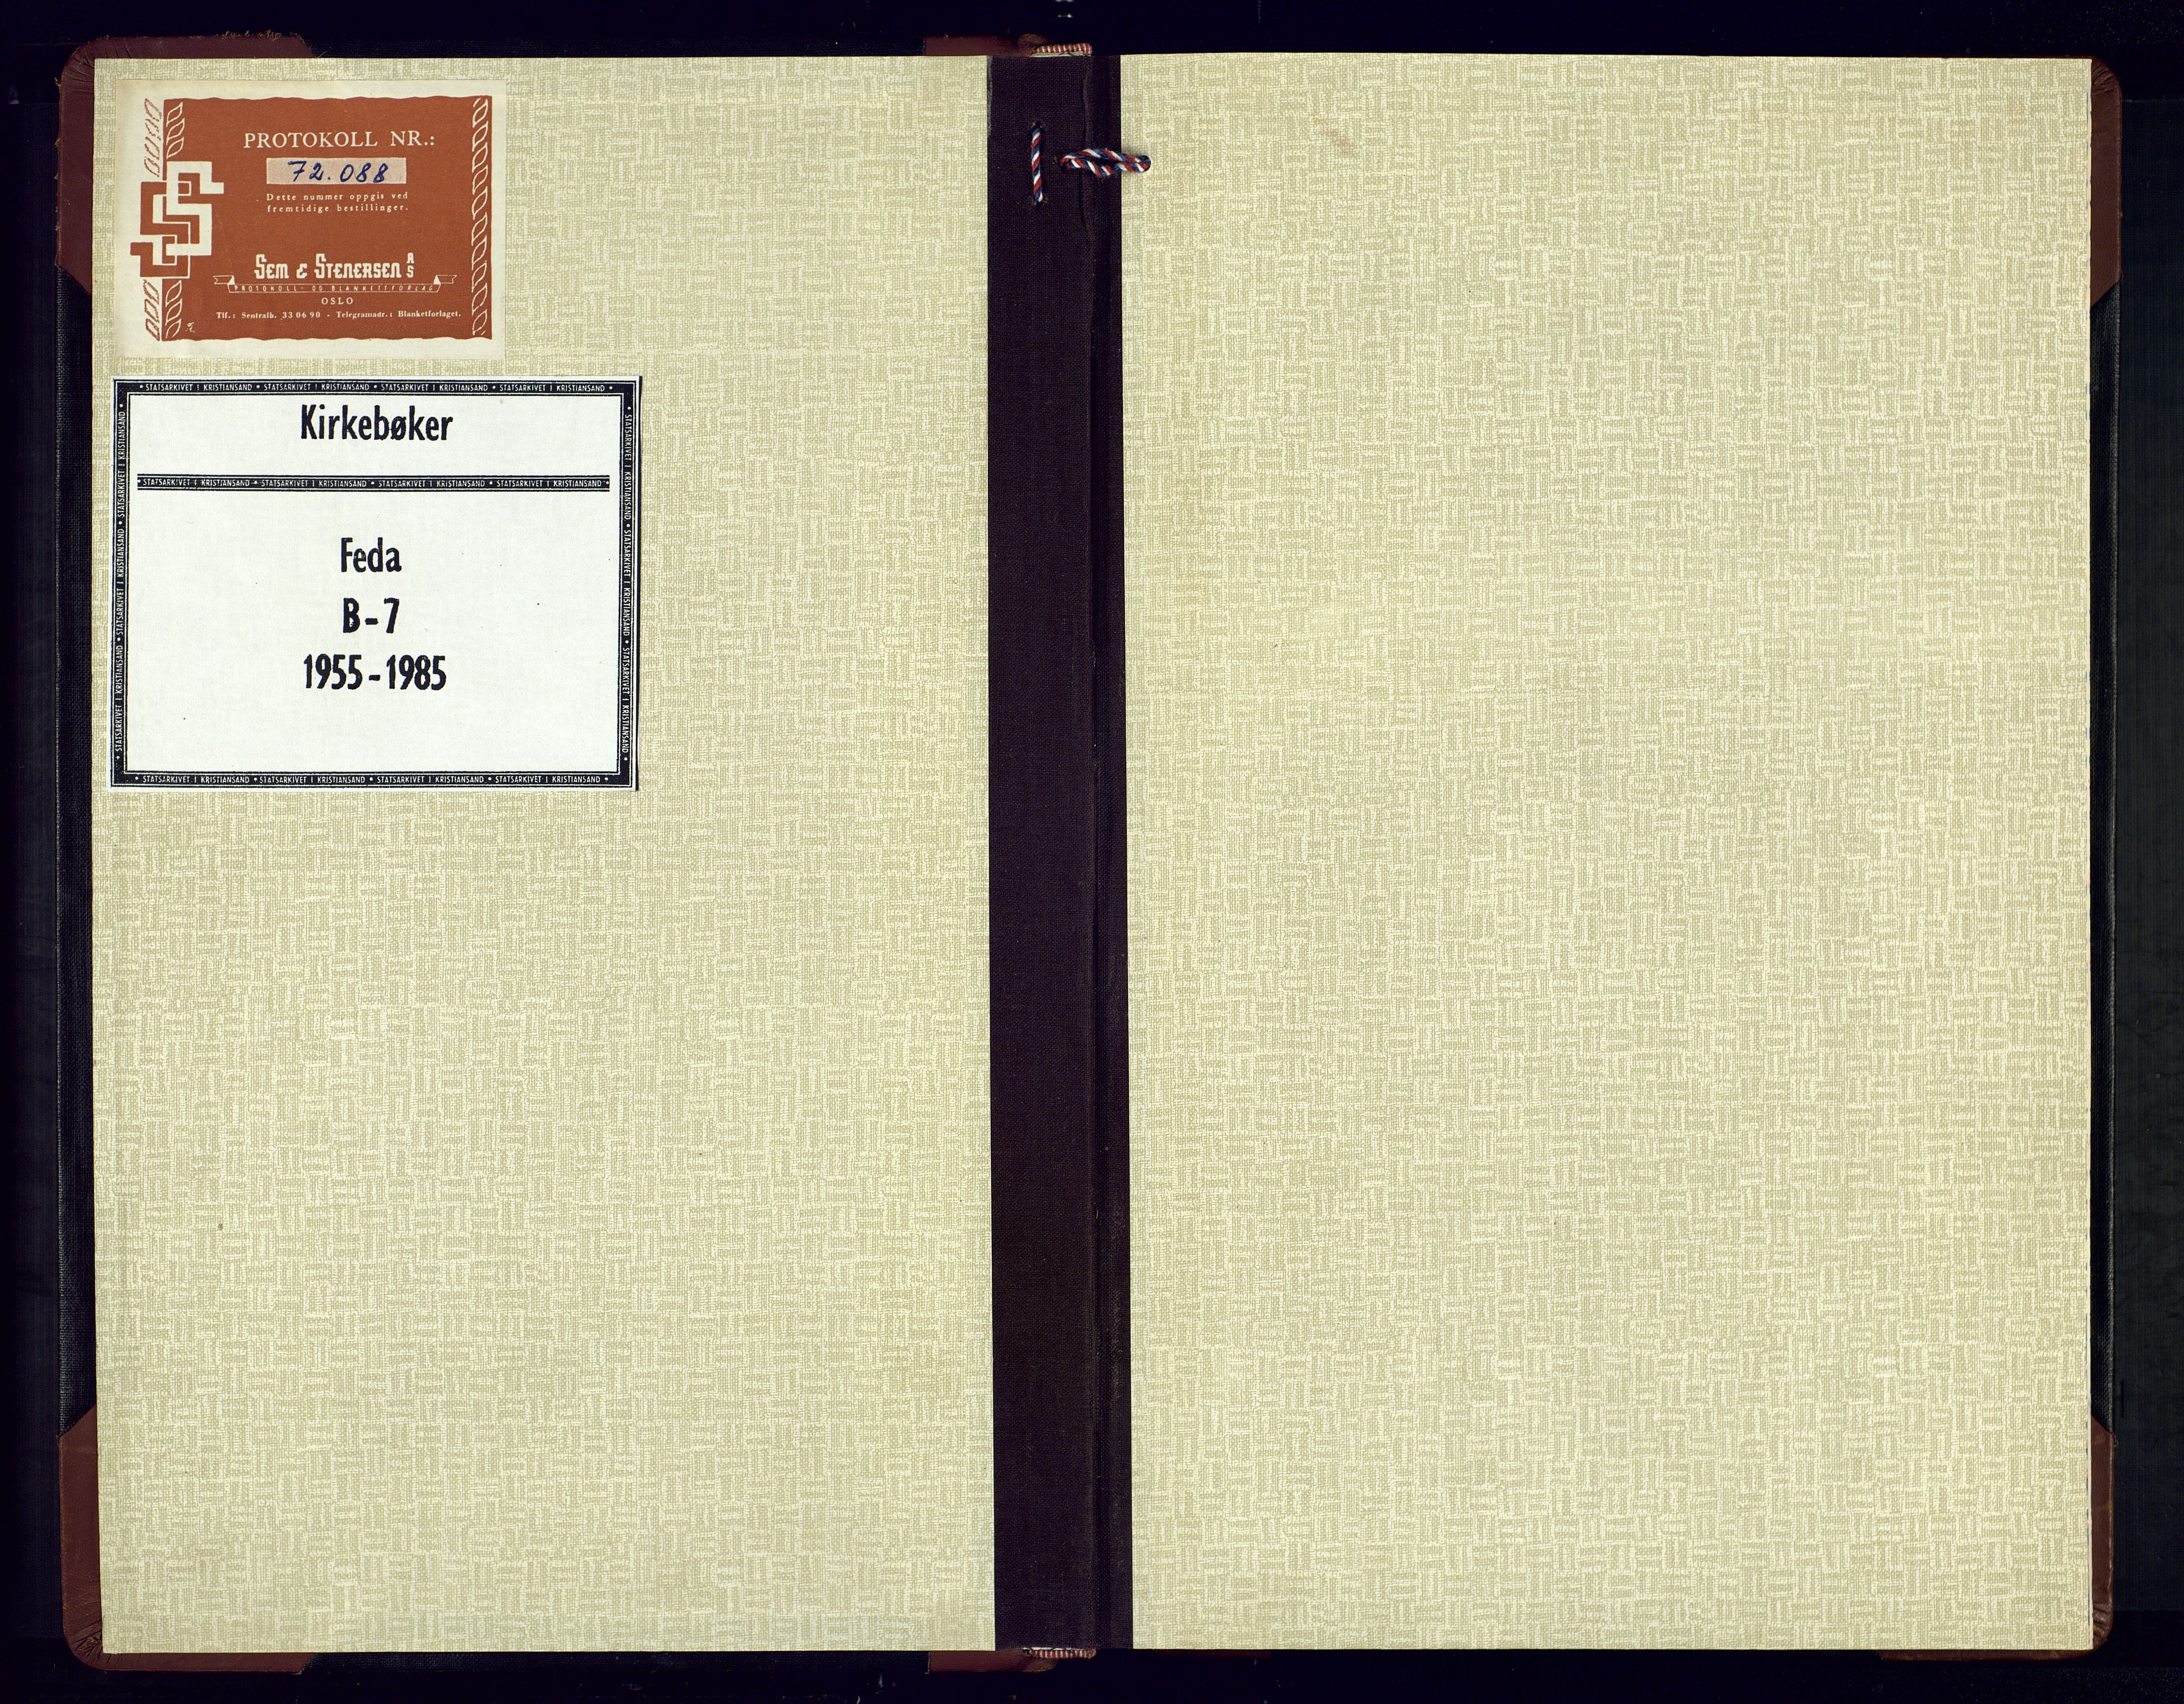 Kvinesdal sokneprestkontor, SAK/1111-0026/F/Fb/Fba/L0007: Klokkerbok nr. B 7, 1955-1985